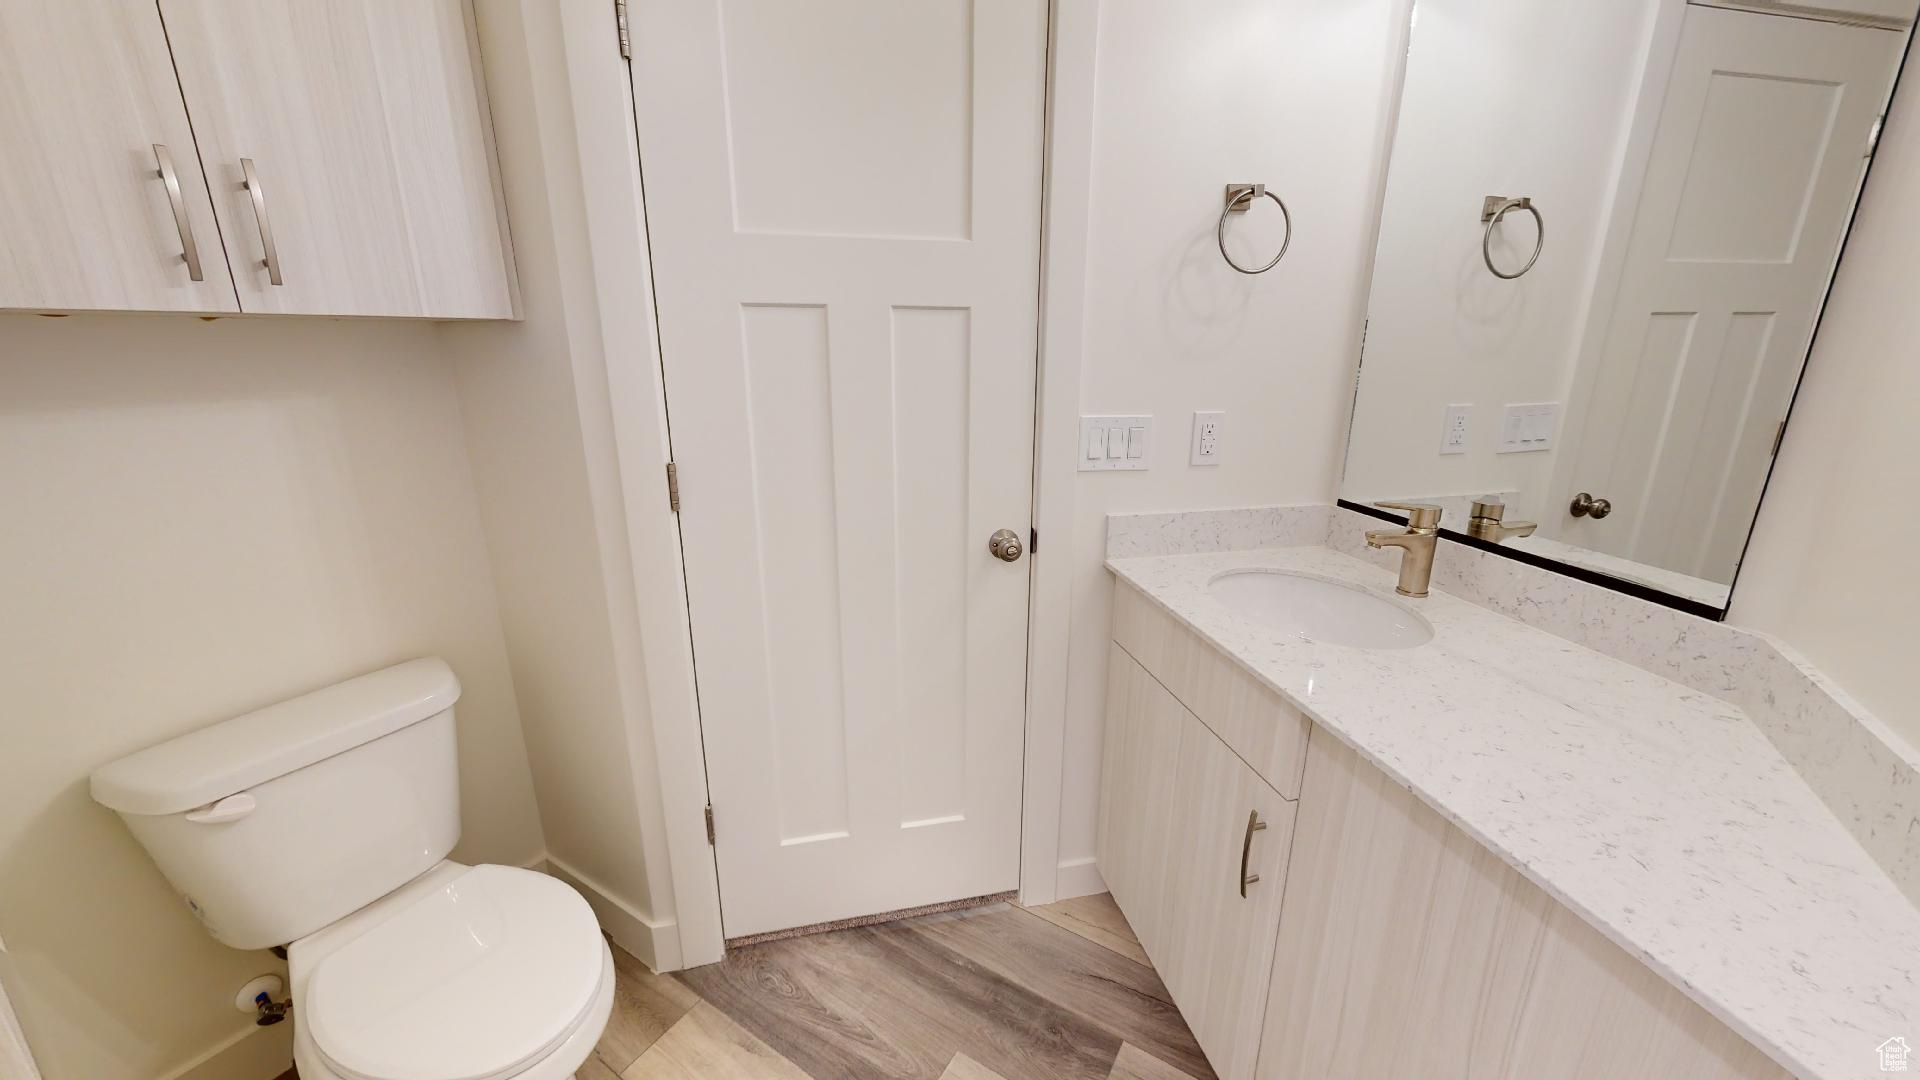 Bathroom with hardwood / wood-style floors, toilet, and large vanity